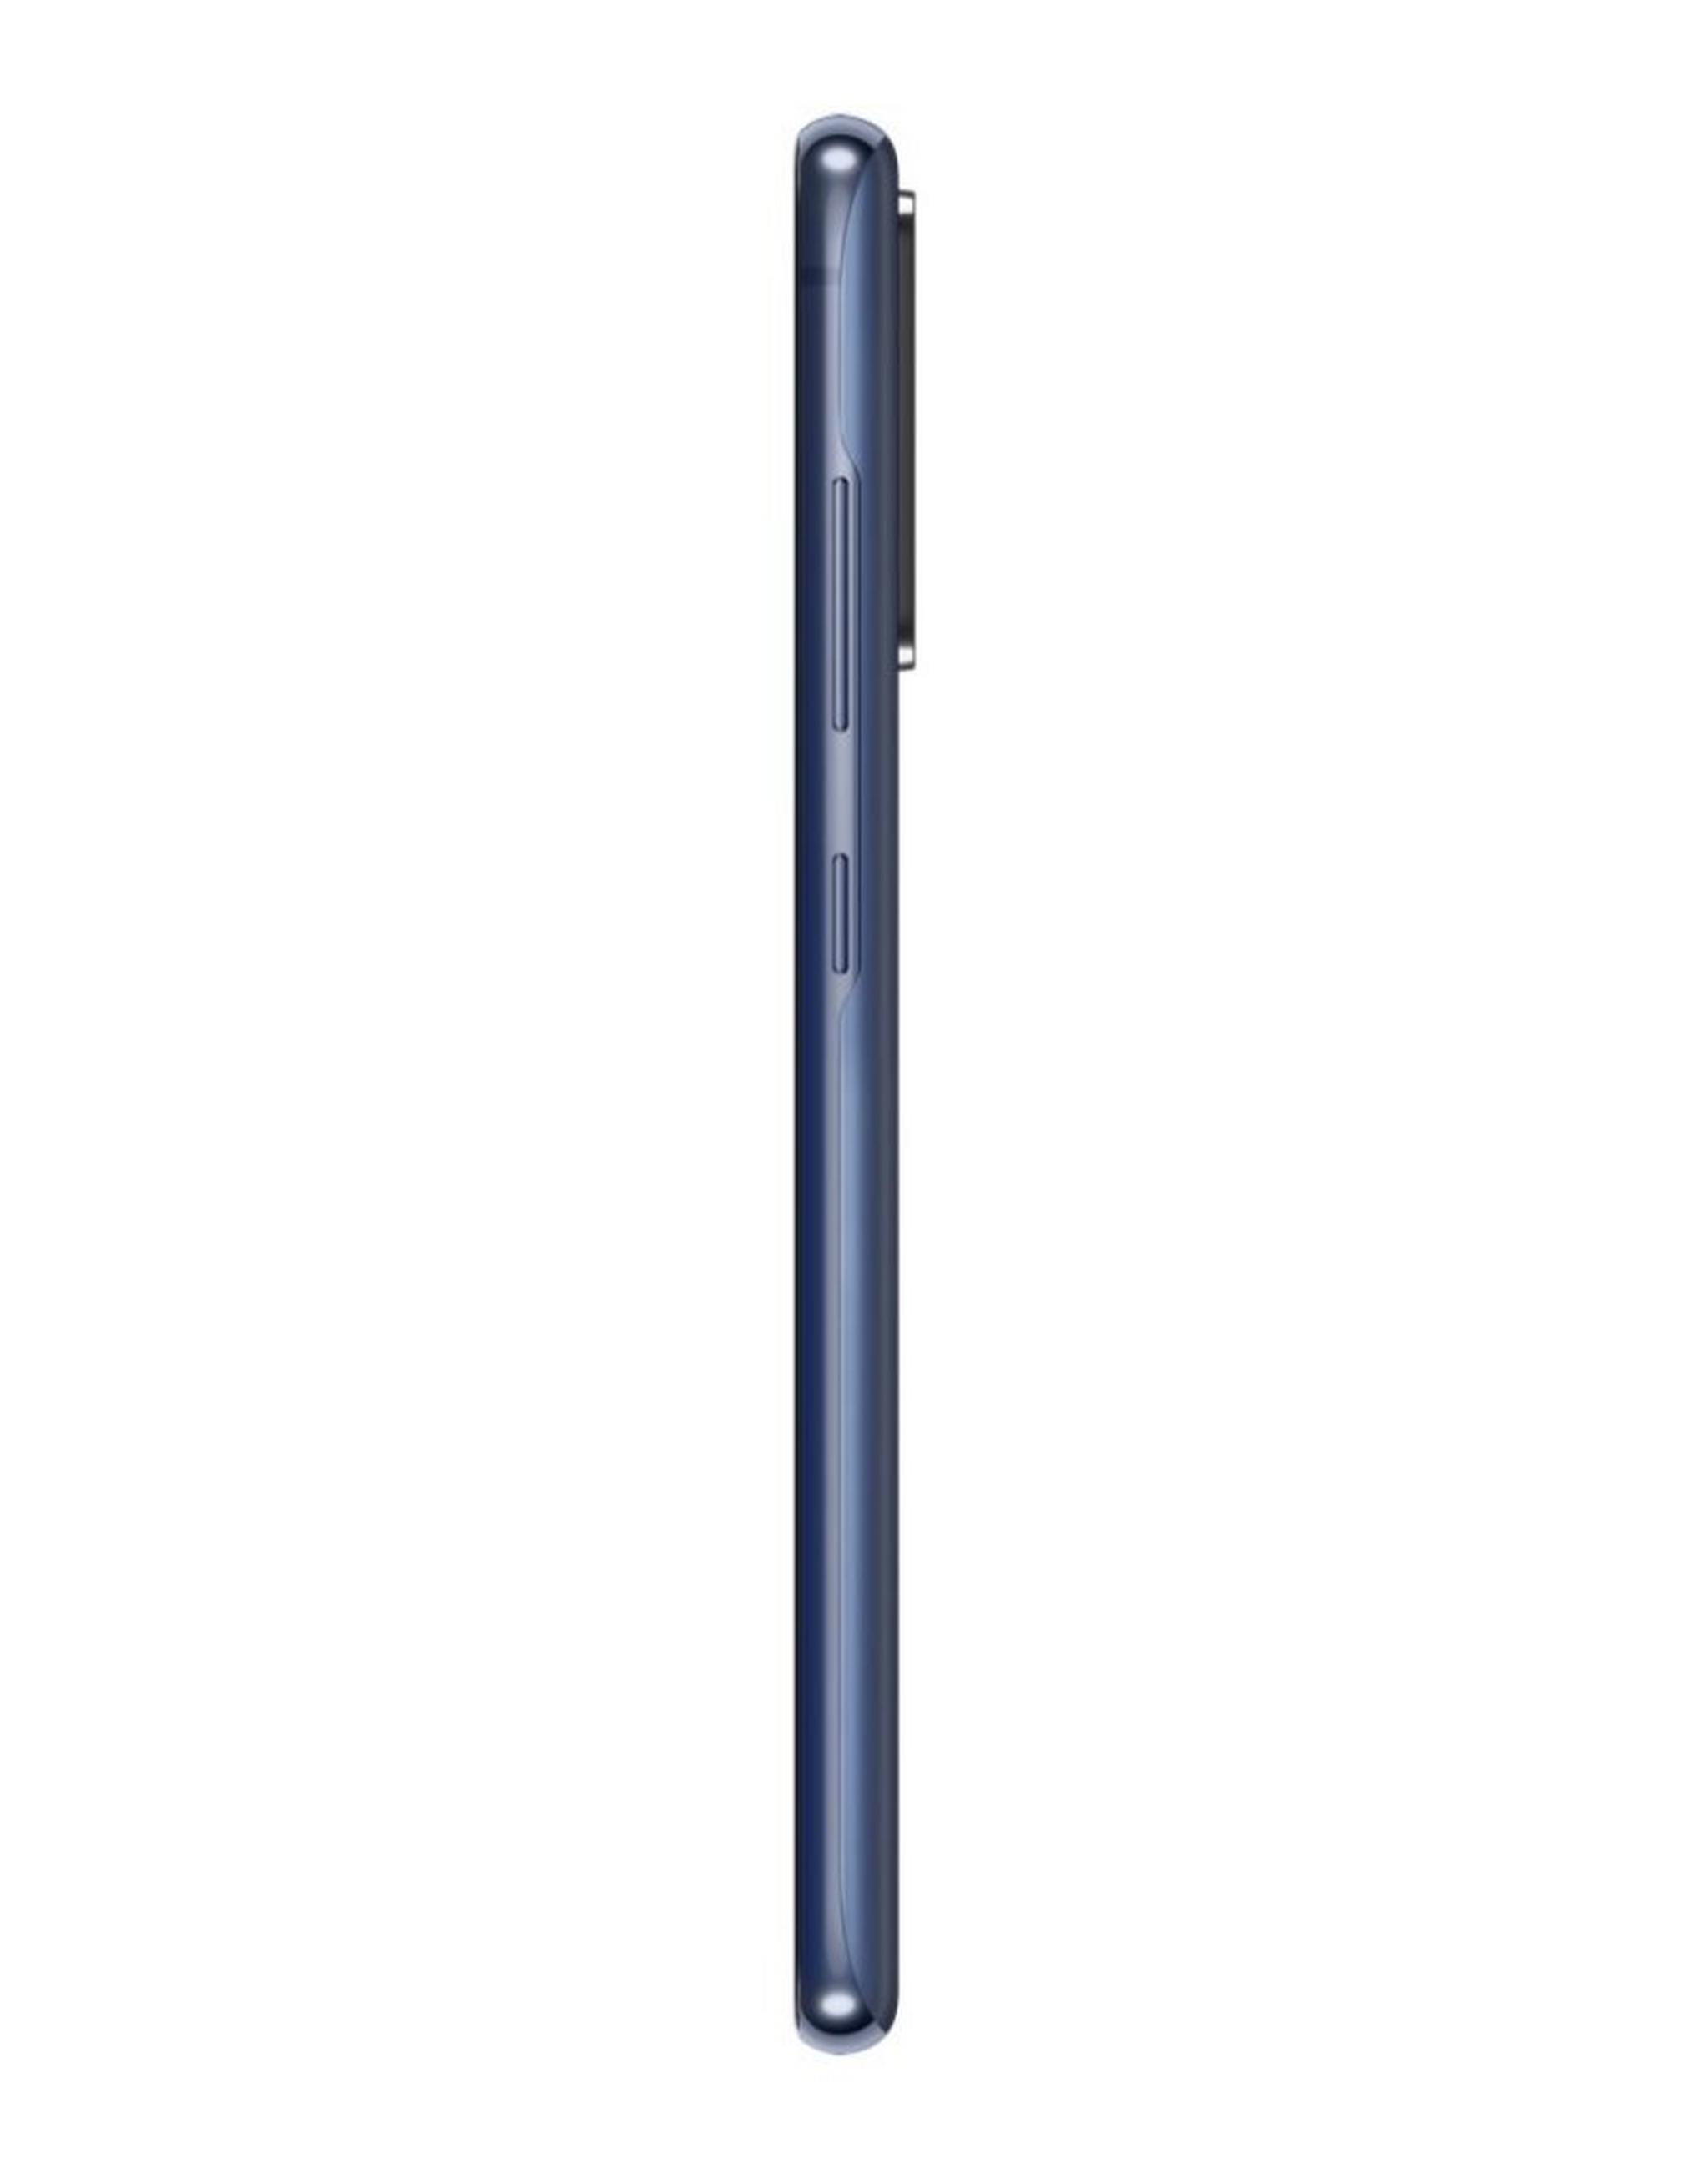 Samsung S20 Fan Edition 5G 128GB Phone – Navy